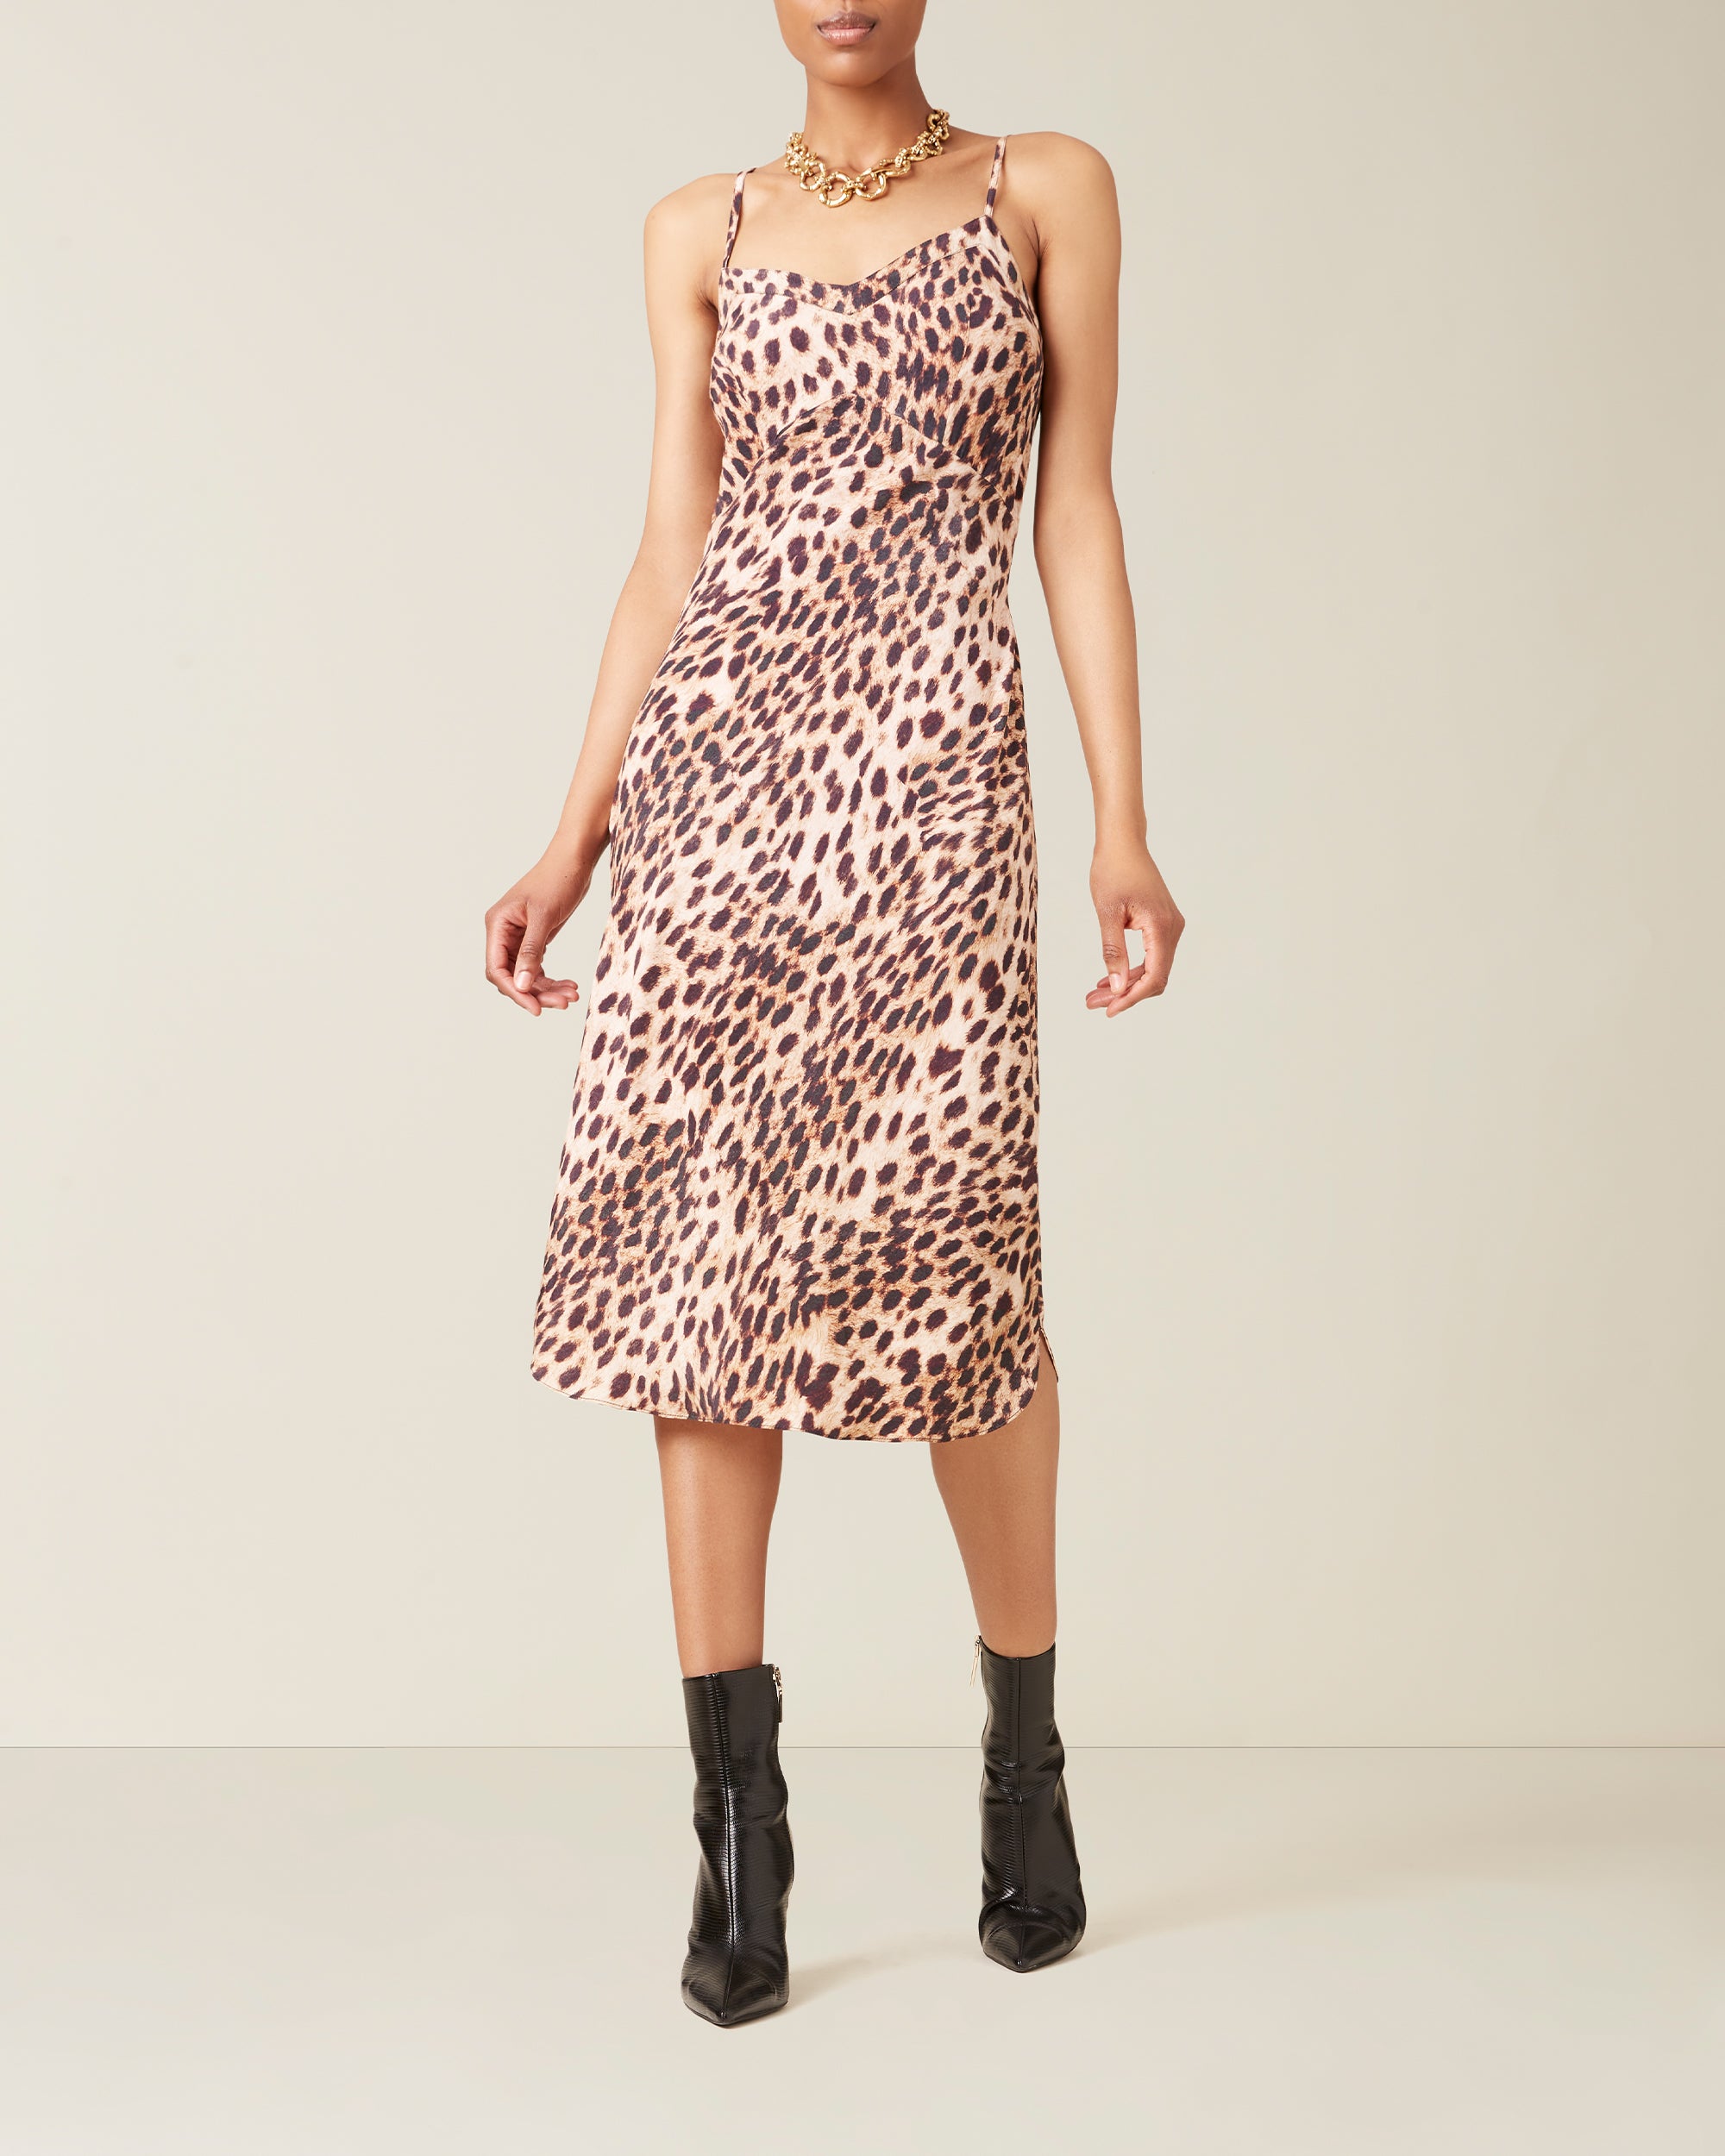 Cheetah Print Slip Dress